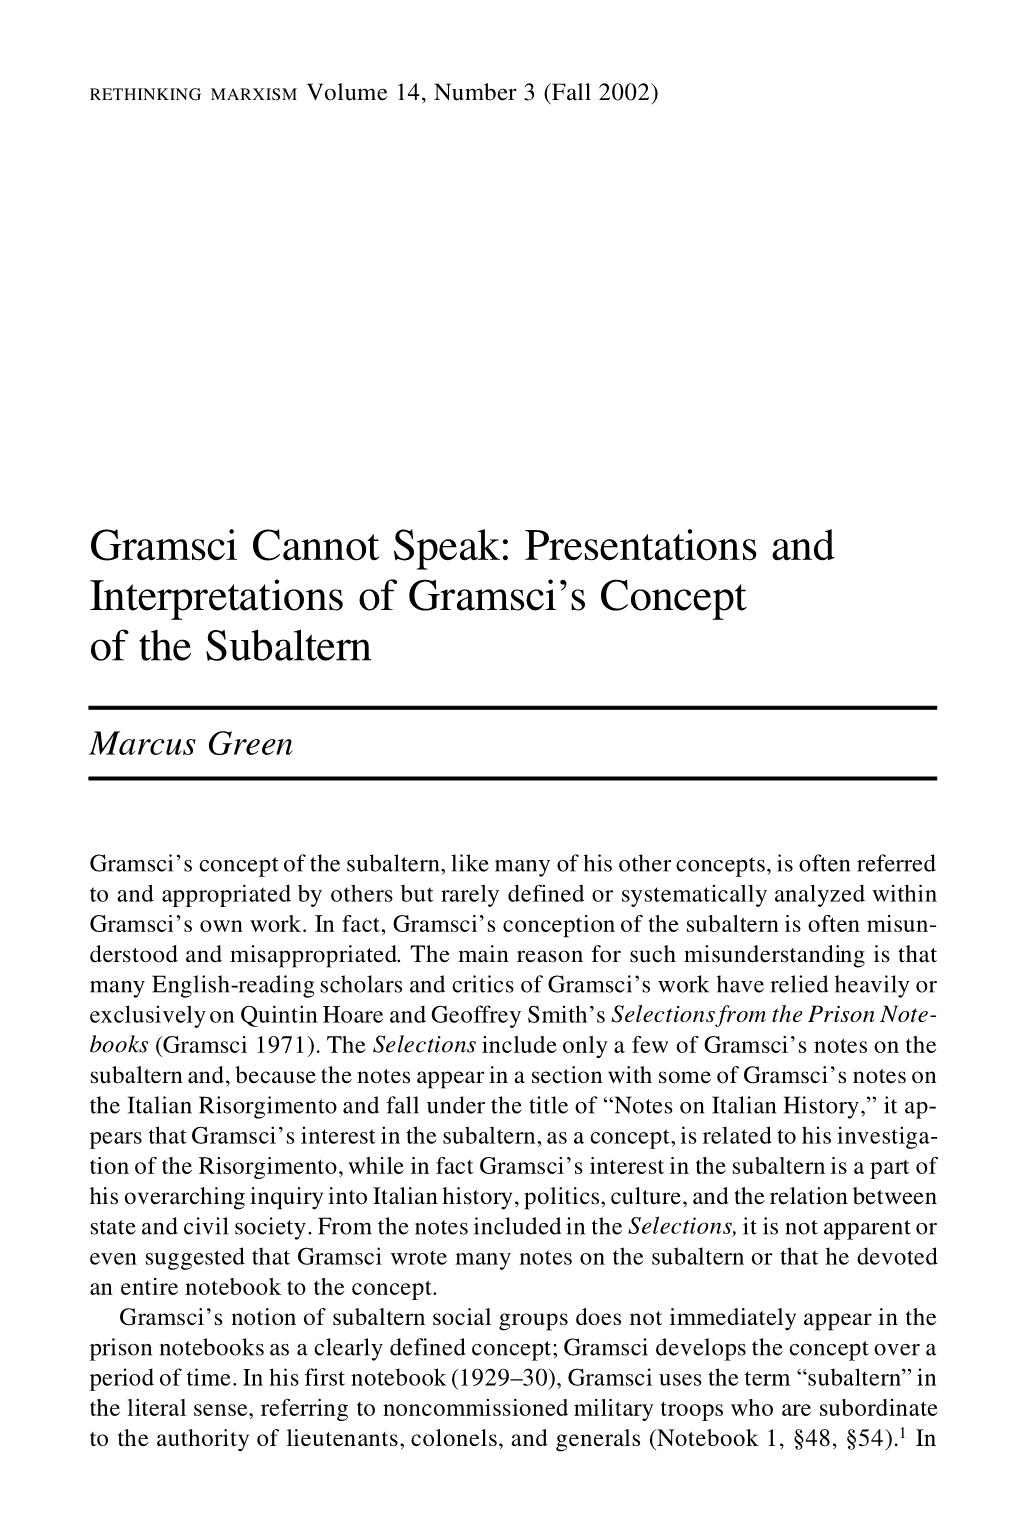 Gramsci Cannot Speak: Presentations and Interpretations of Gramsci’S Concept of the Subaltern